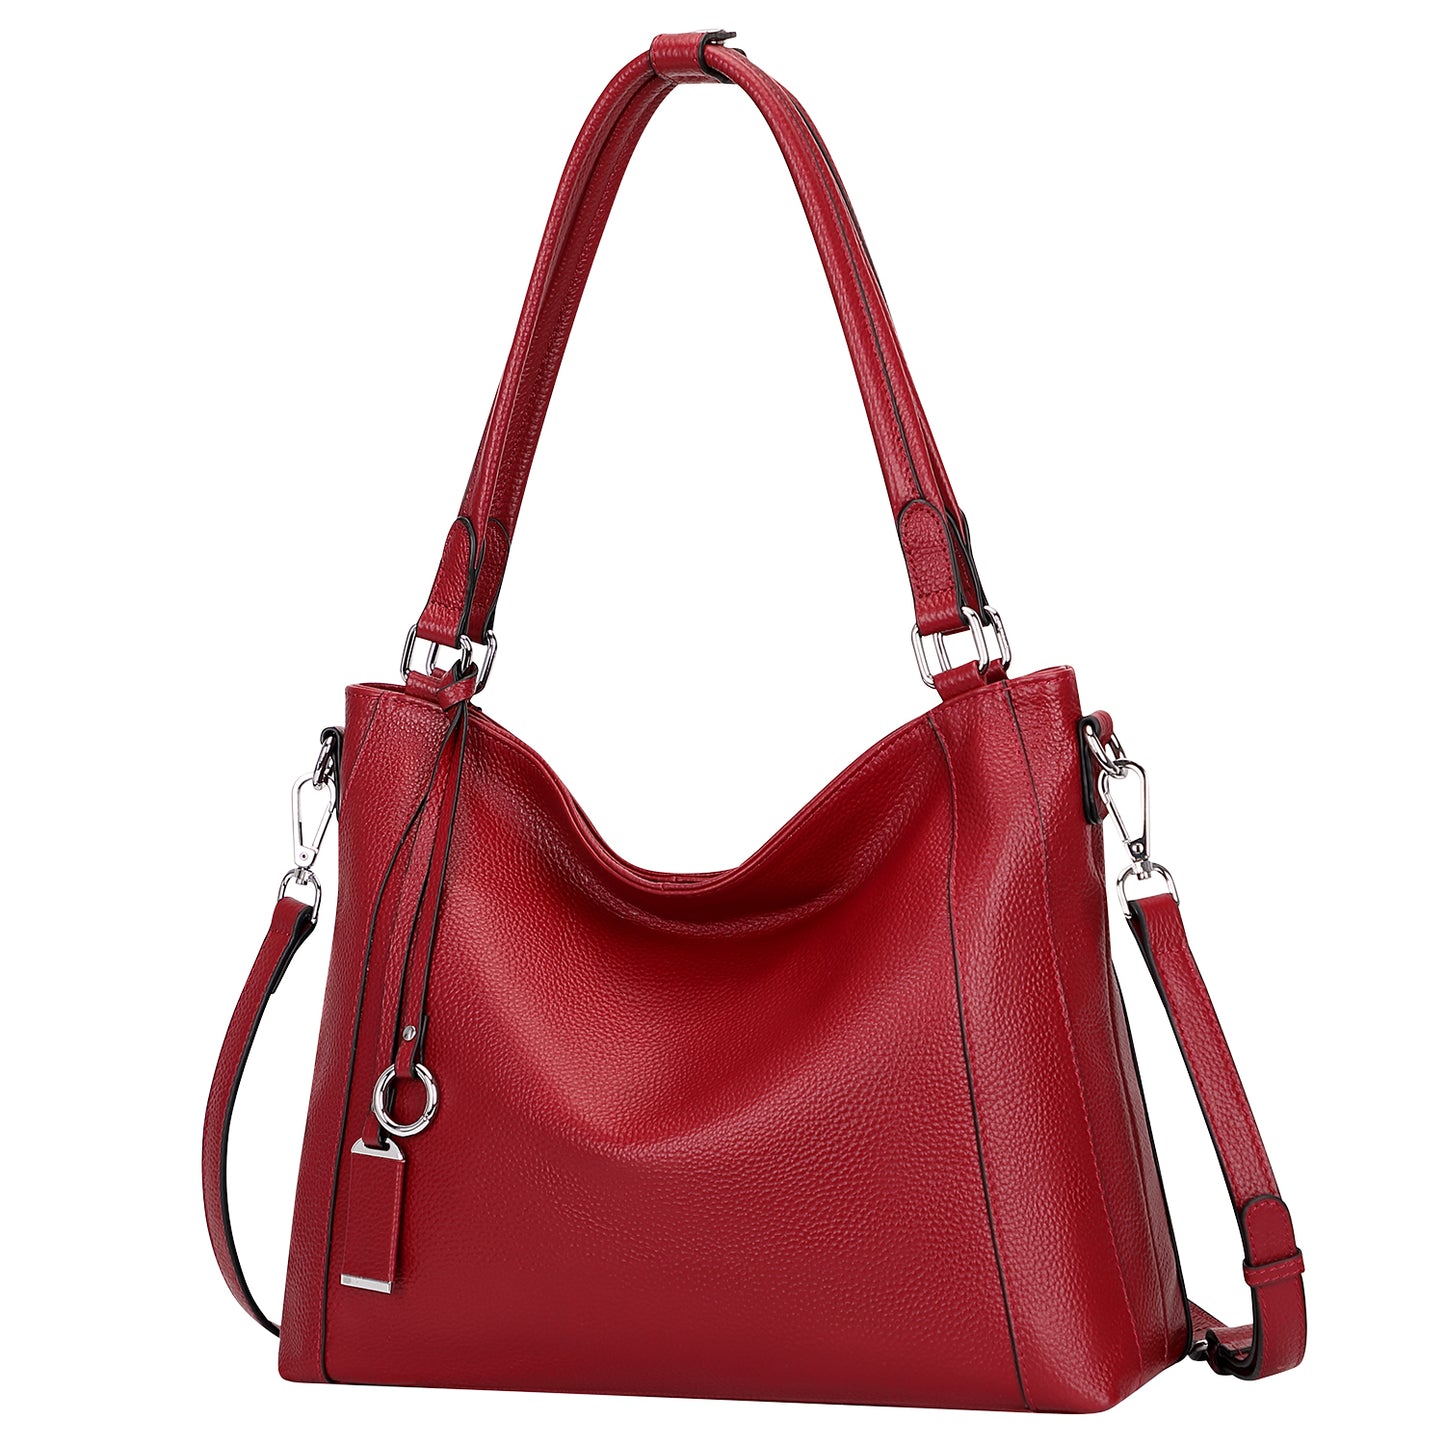 Handbags Adjustable Michael Kors Handbag, For Office, Size: H-9inch W-12inch